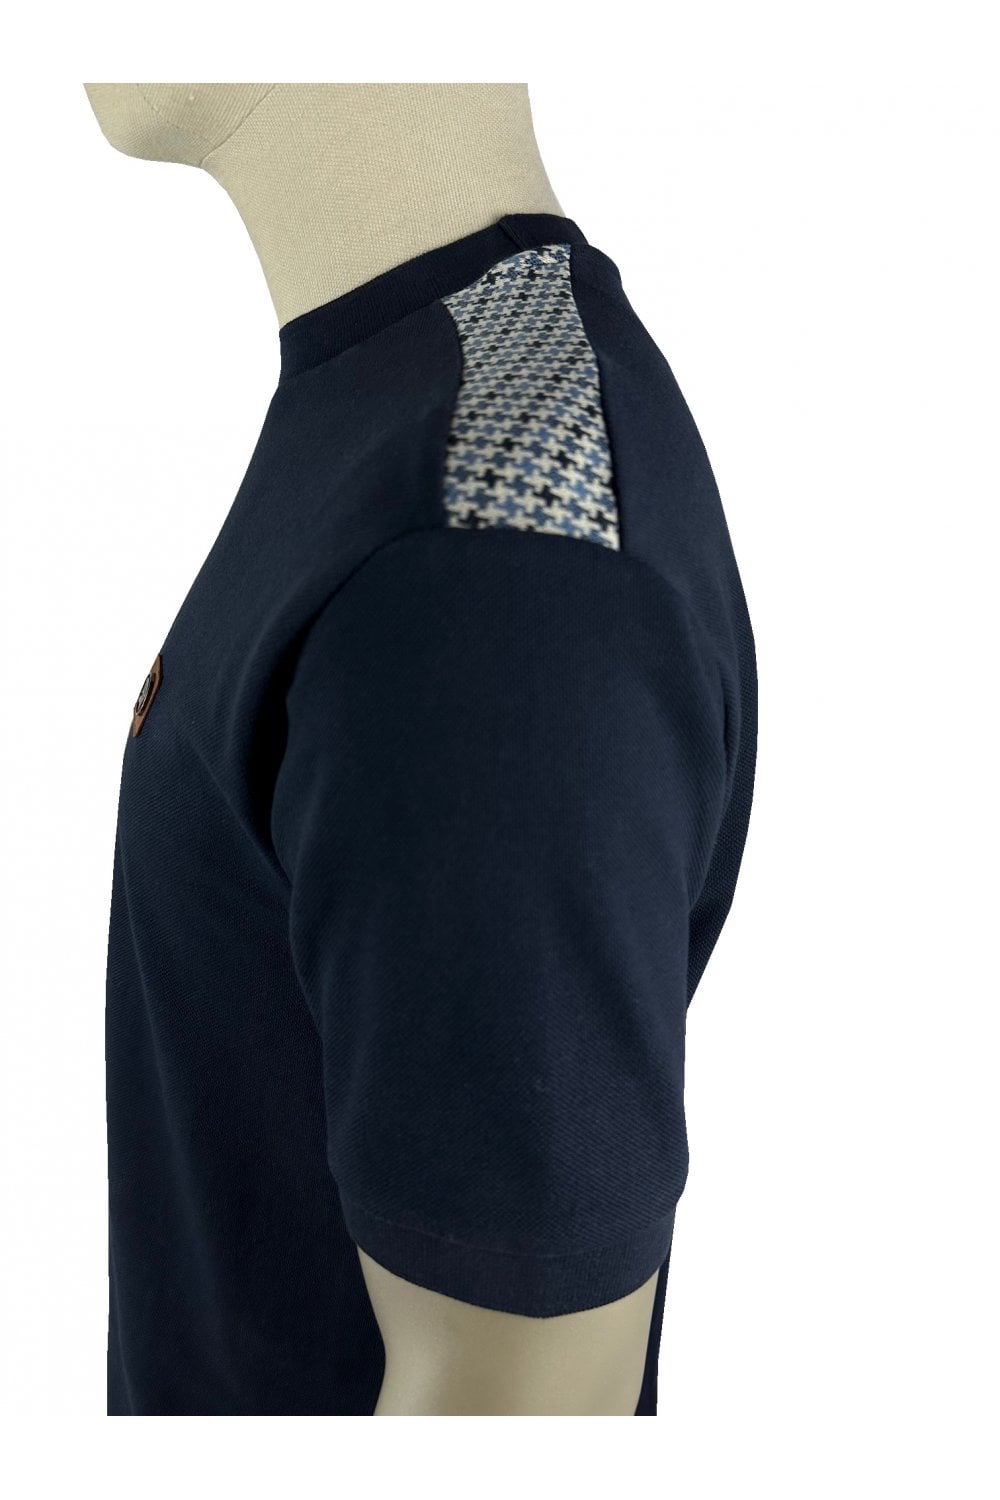 TROJAN Houndstooth trim pique tee TR/8881 Navy - Raw Menswear